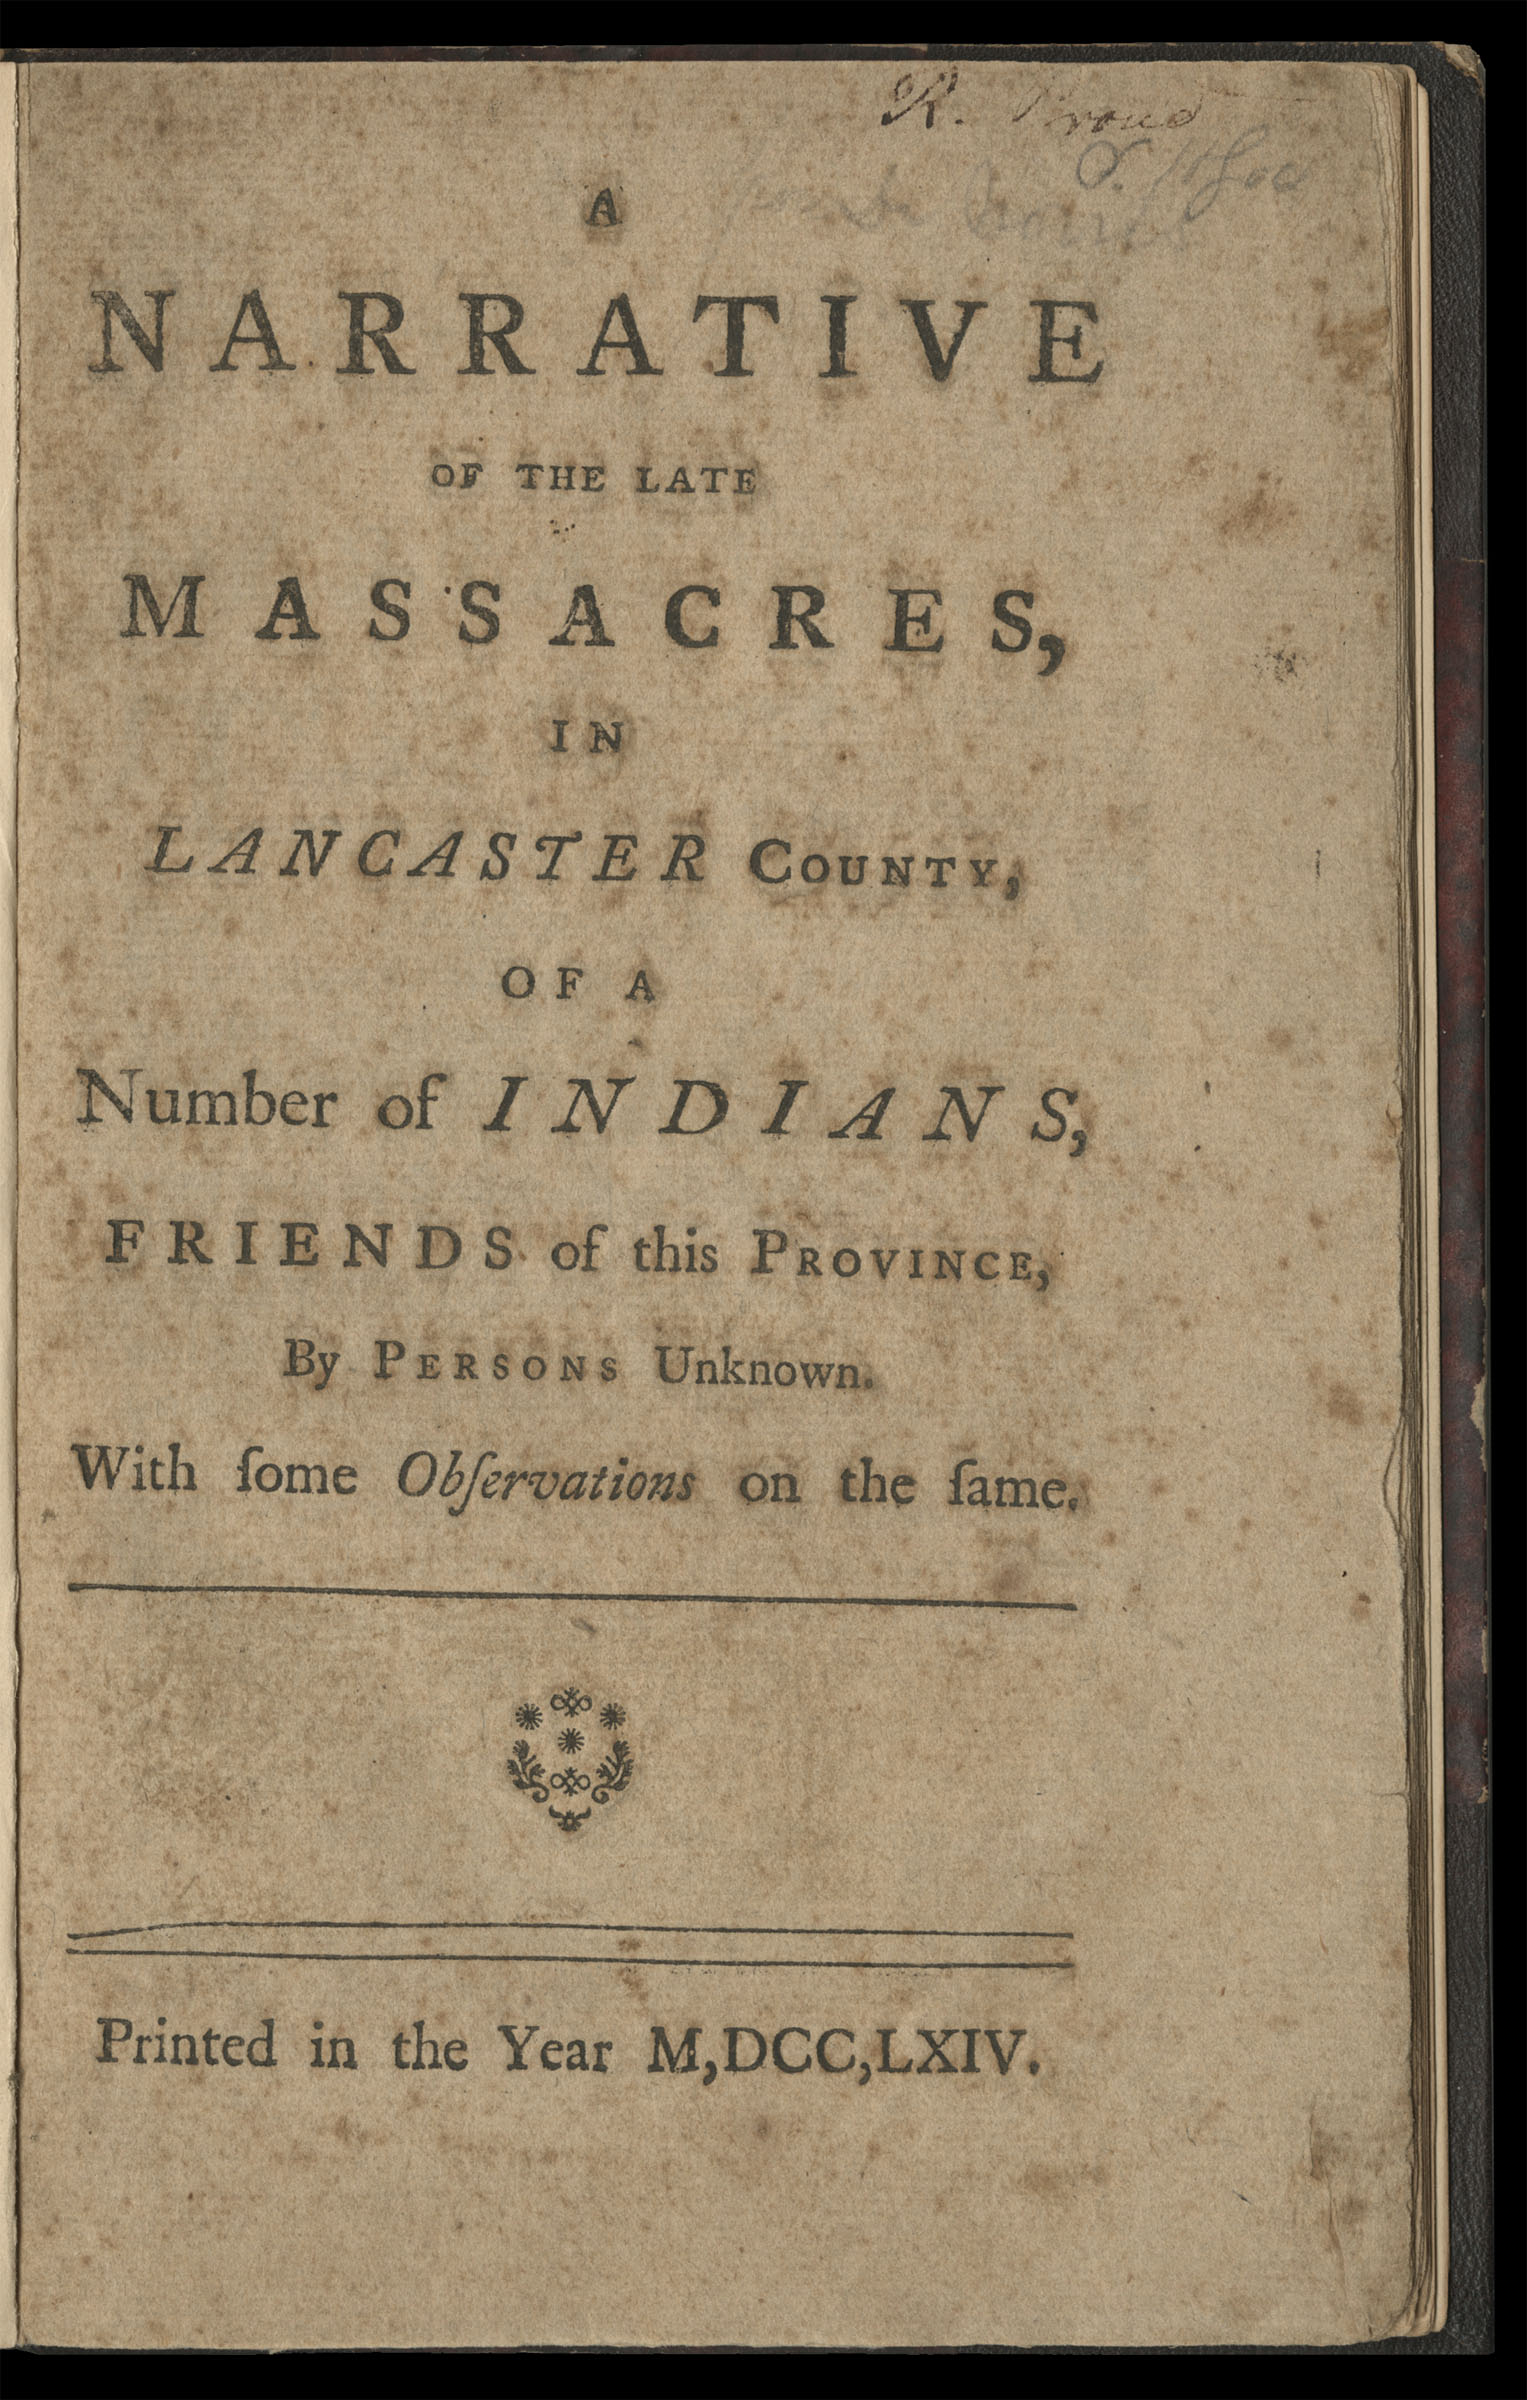 A Narrative of the Late Massacres